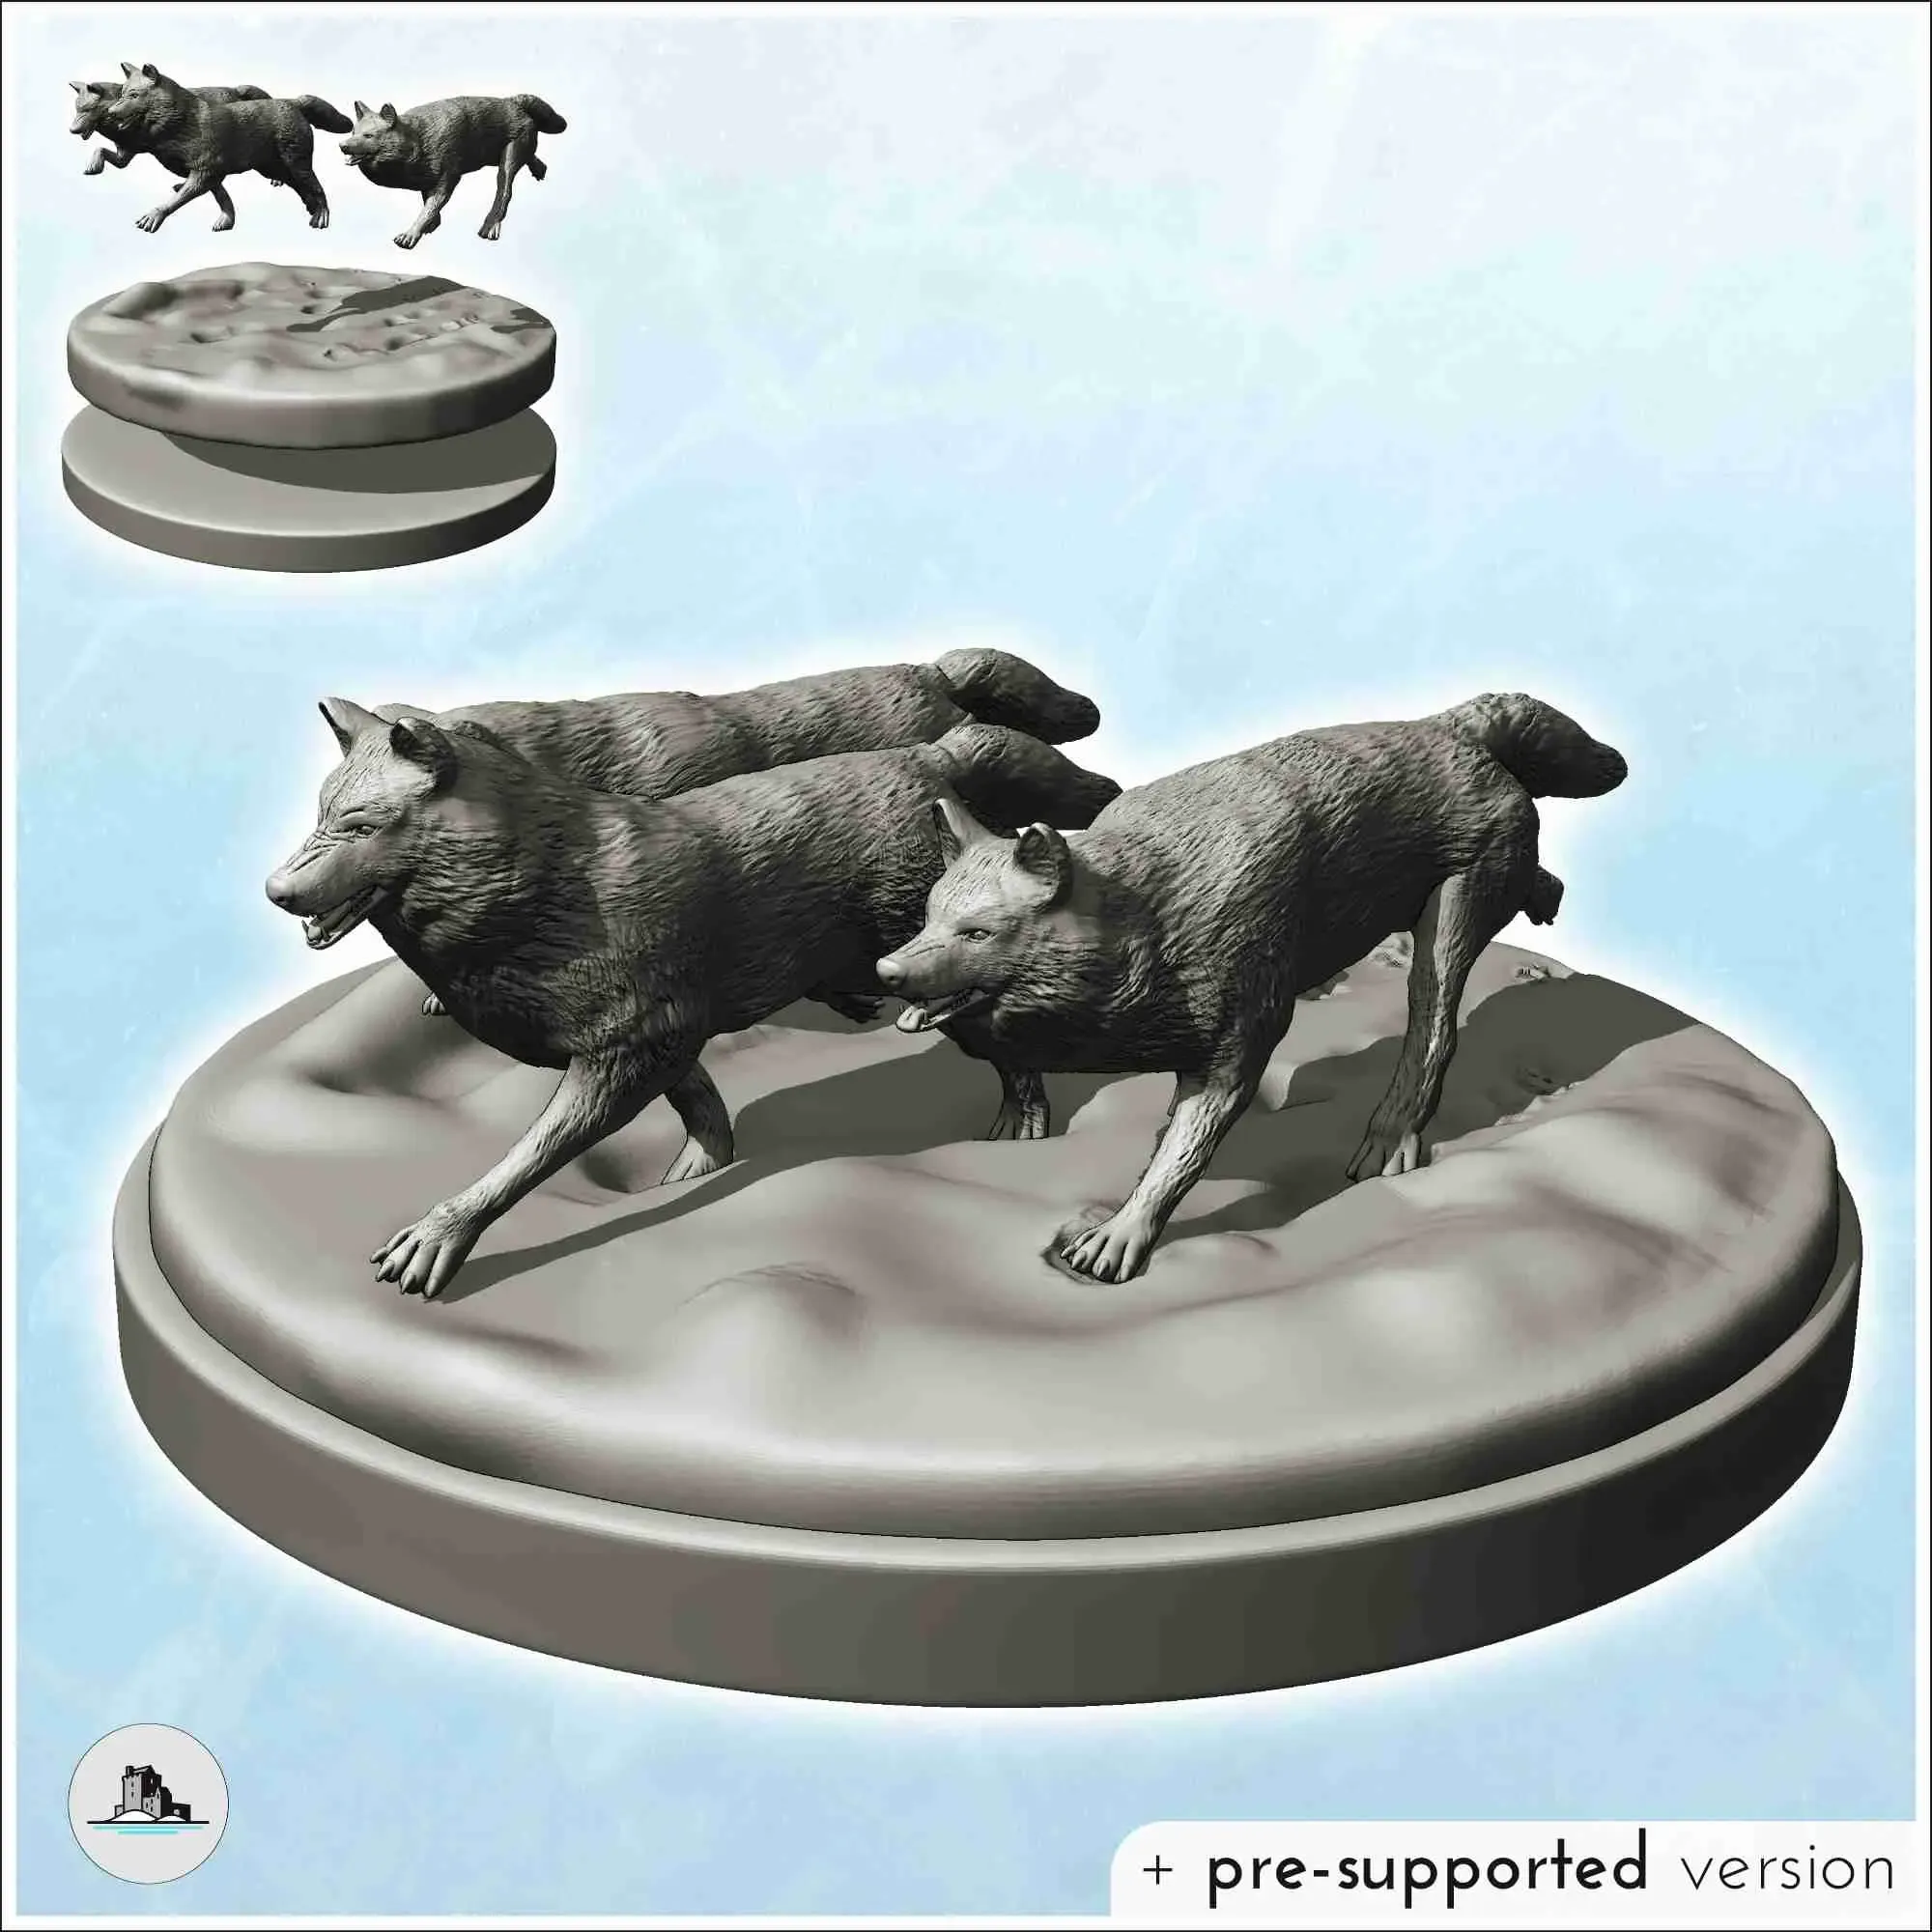 Wild animal figures pack No. 1 - miniatures animal RPG table